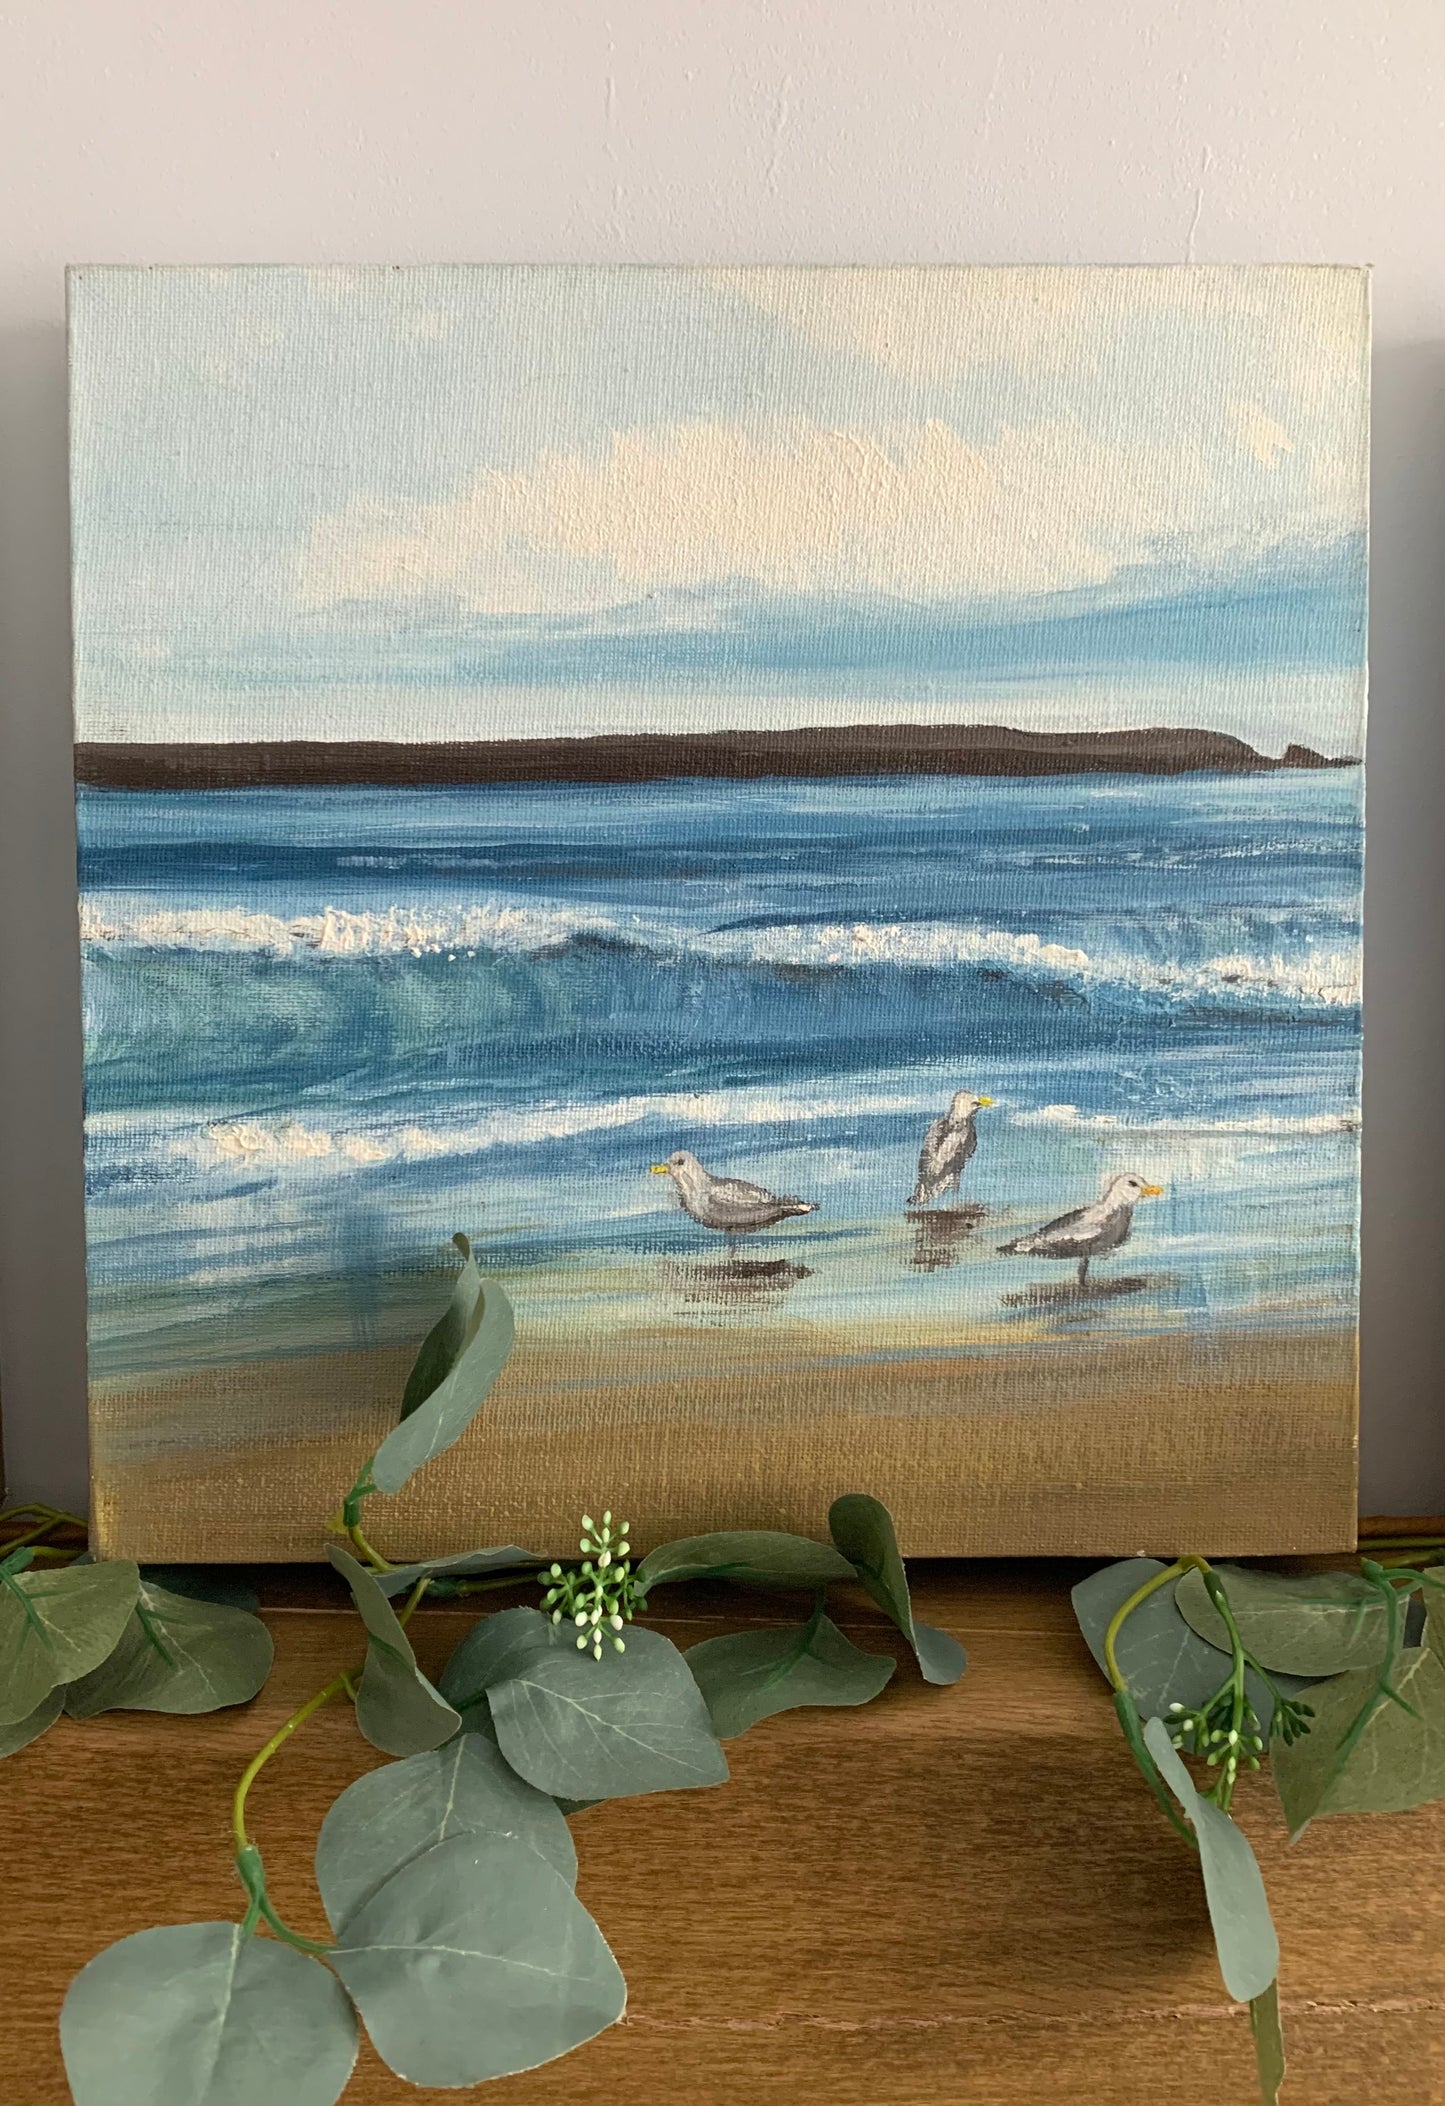 Caldey & Seagulls- Original Painting